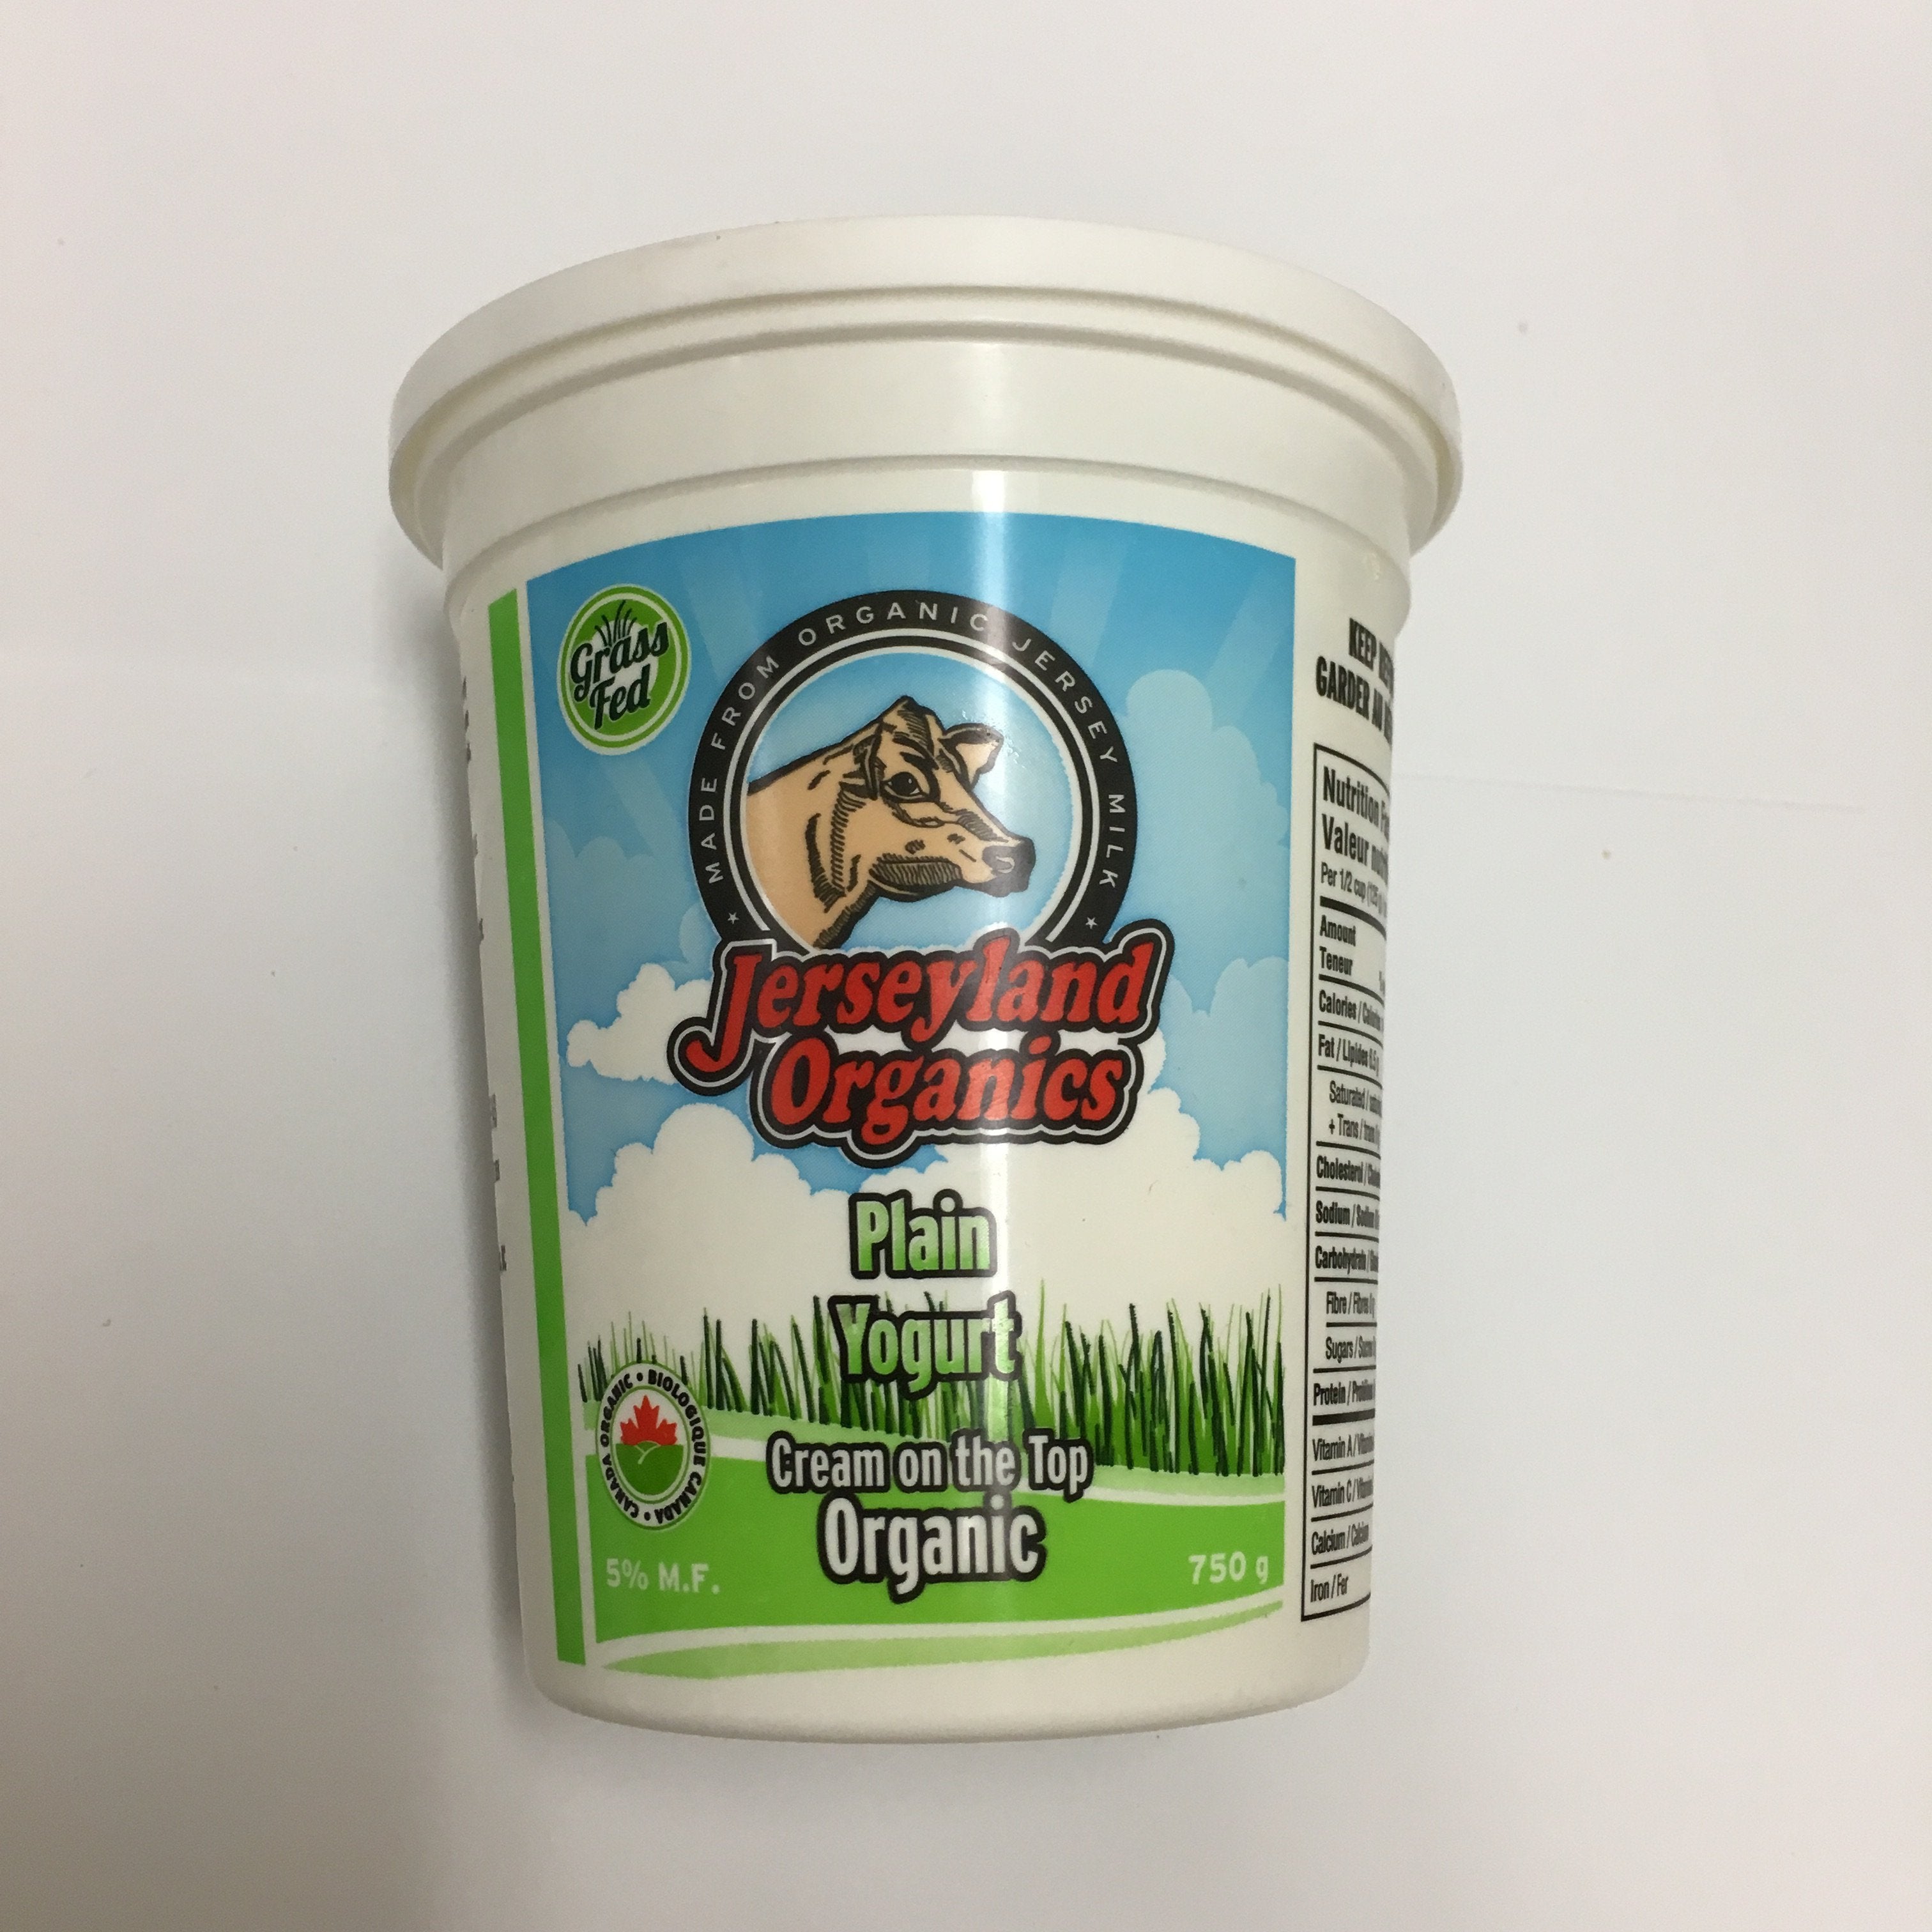 Jerseyland 750g Organic Plain Yogurt